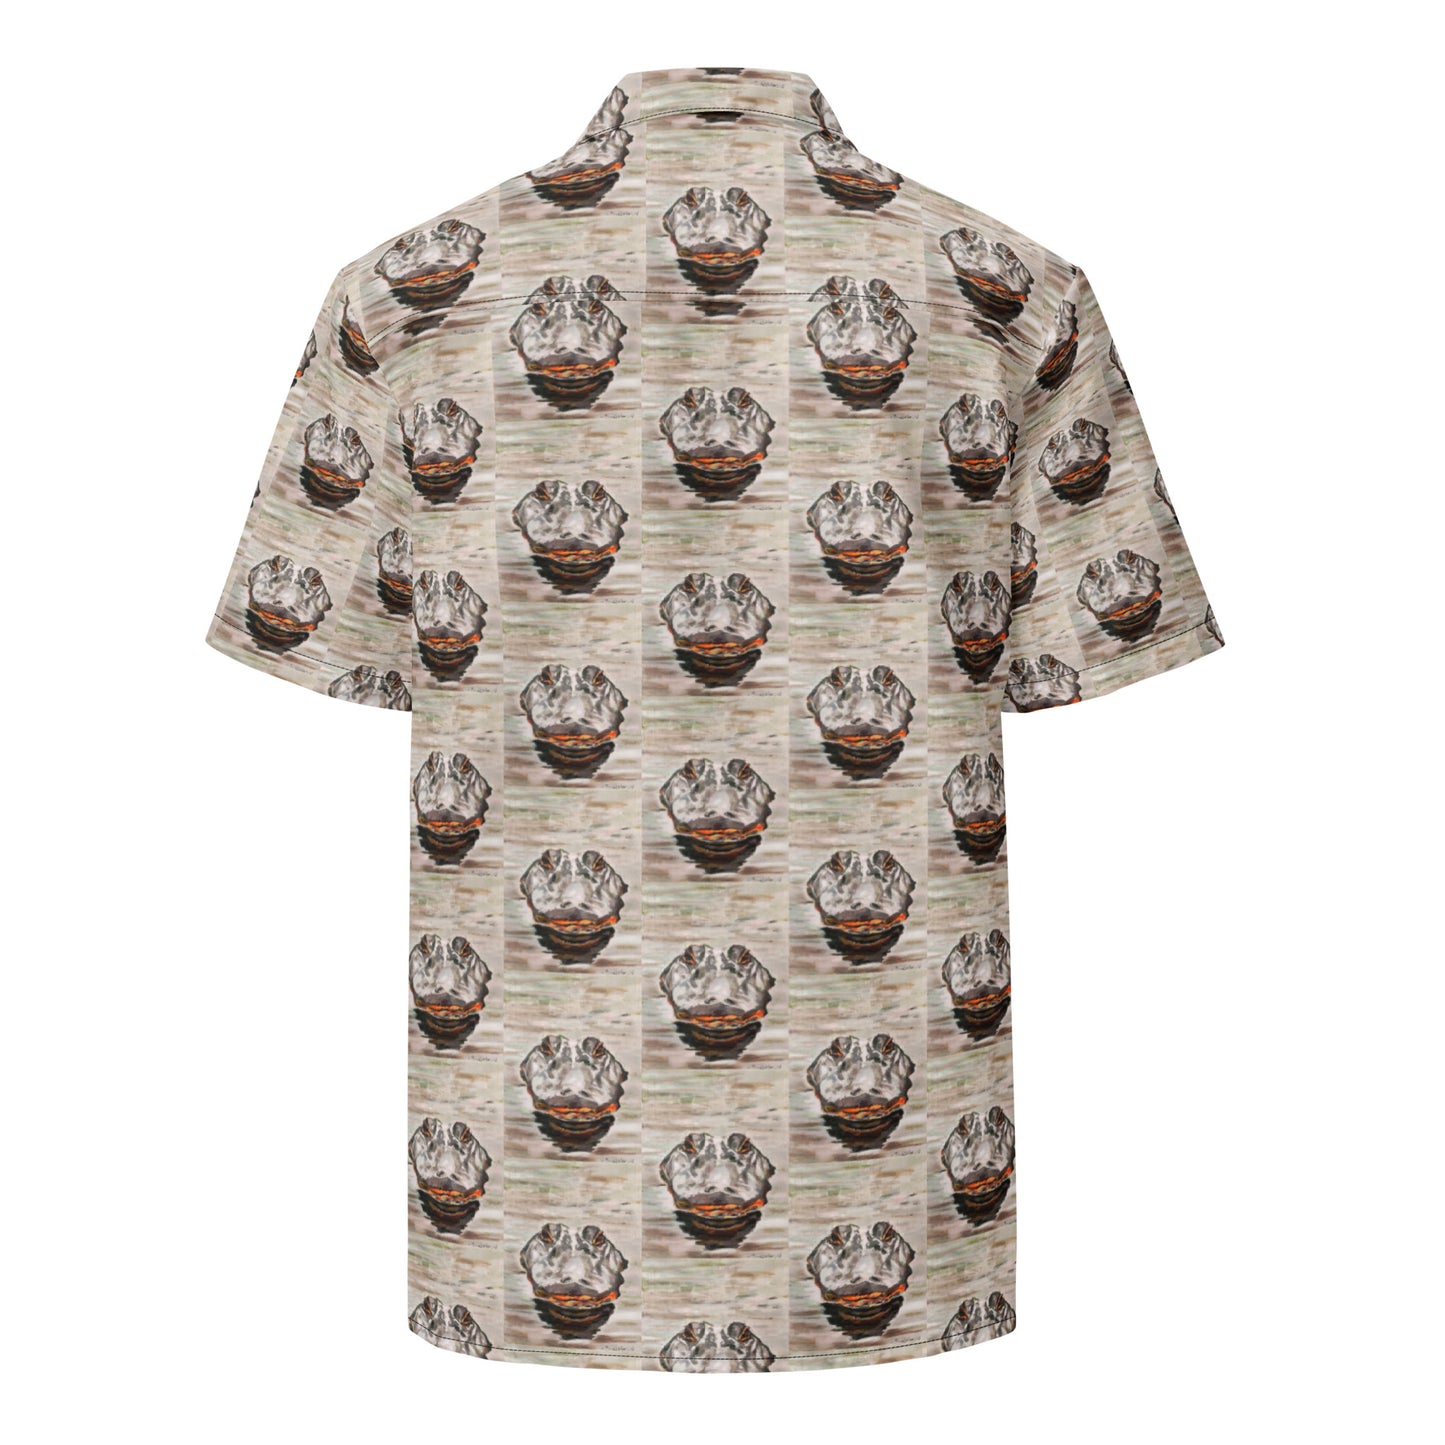 Gator Head Reflection Unisex button shirt